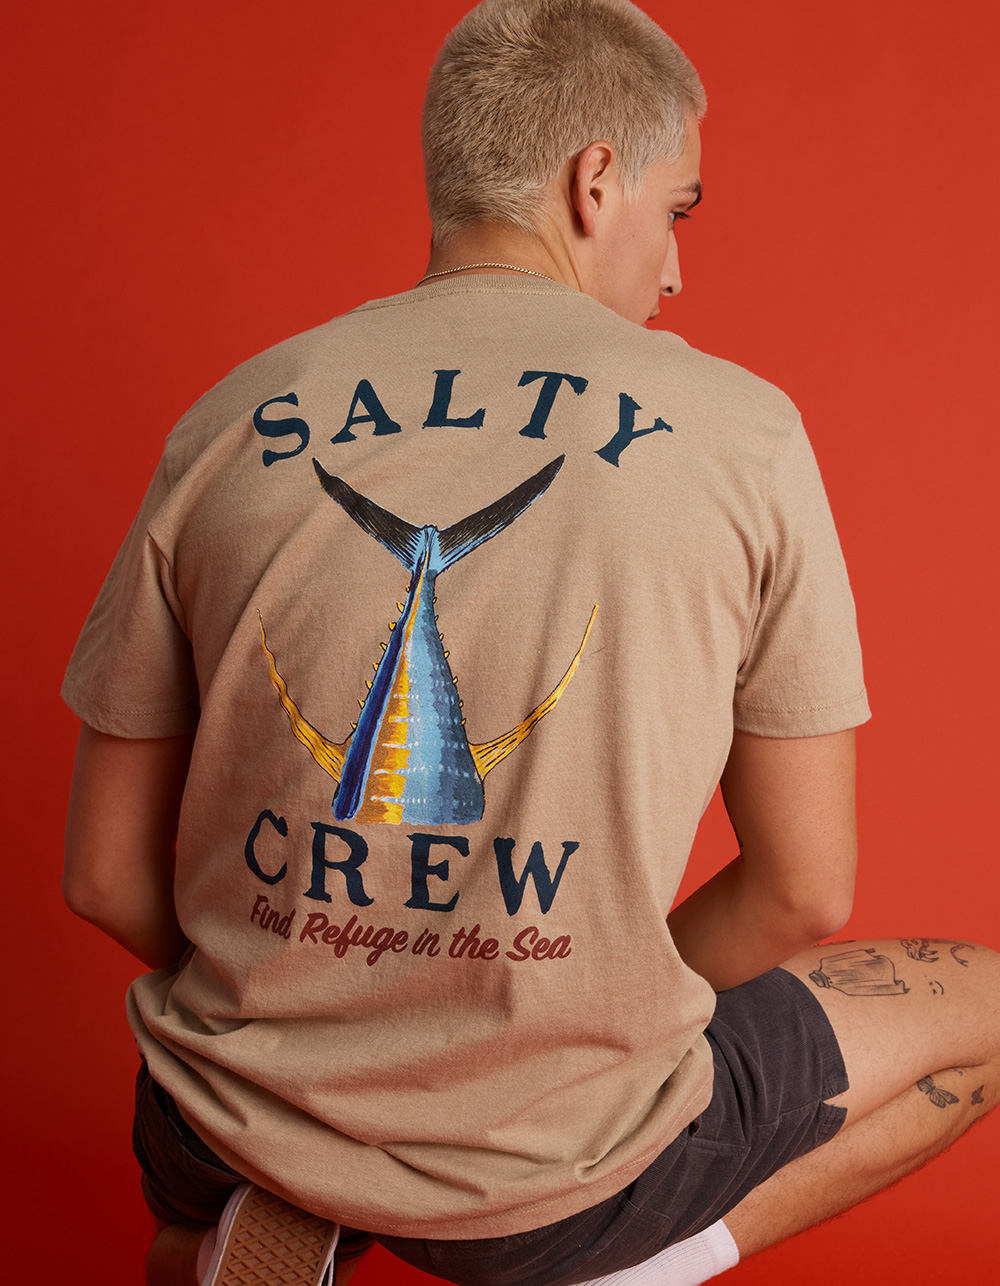 Salty Crew Tailed Refuge Graphic Tee - Sand - Medium